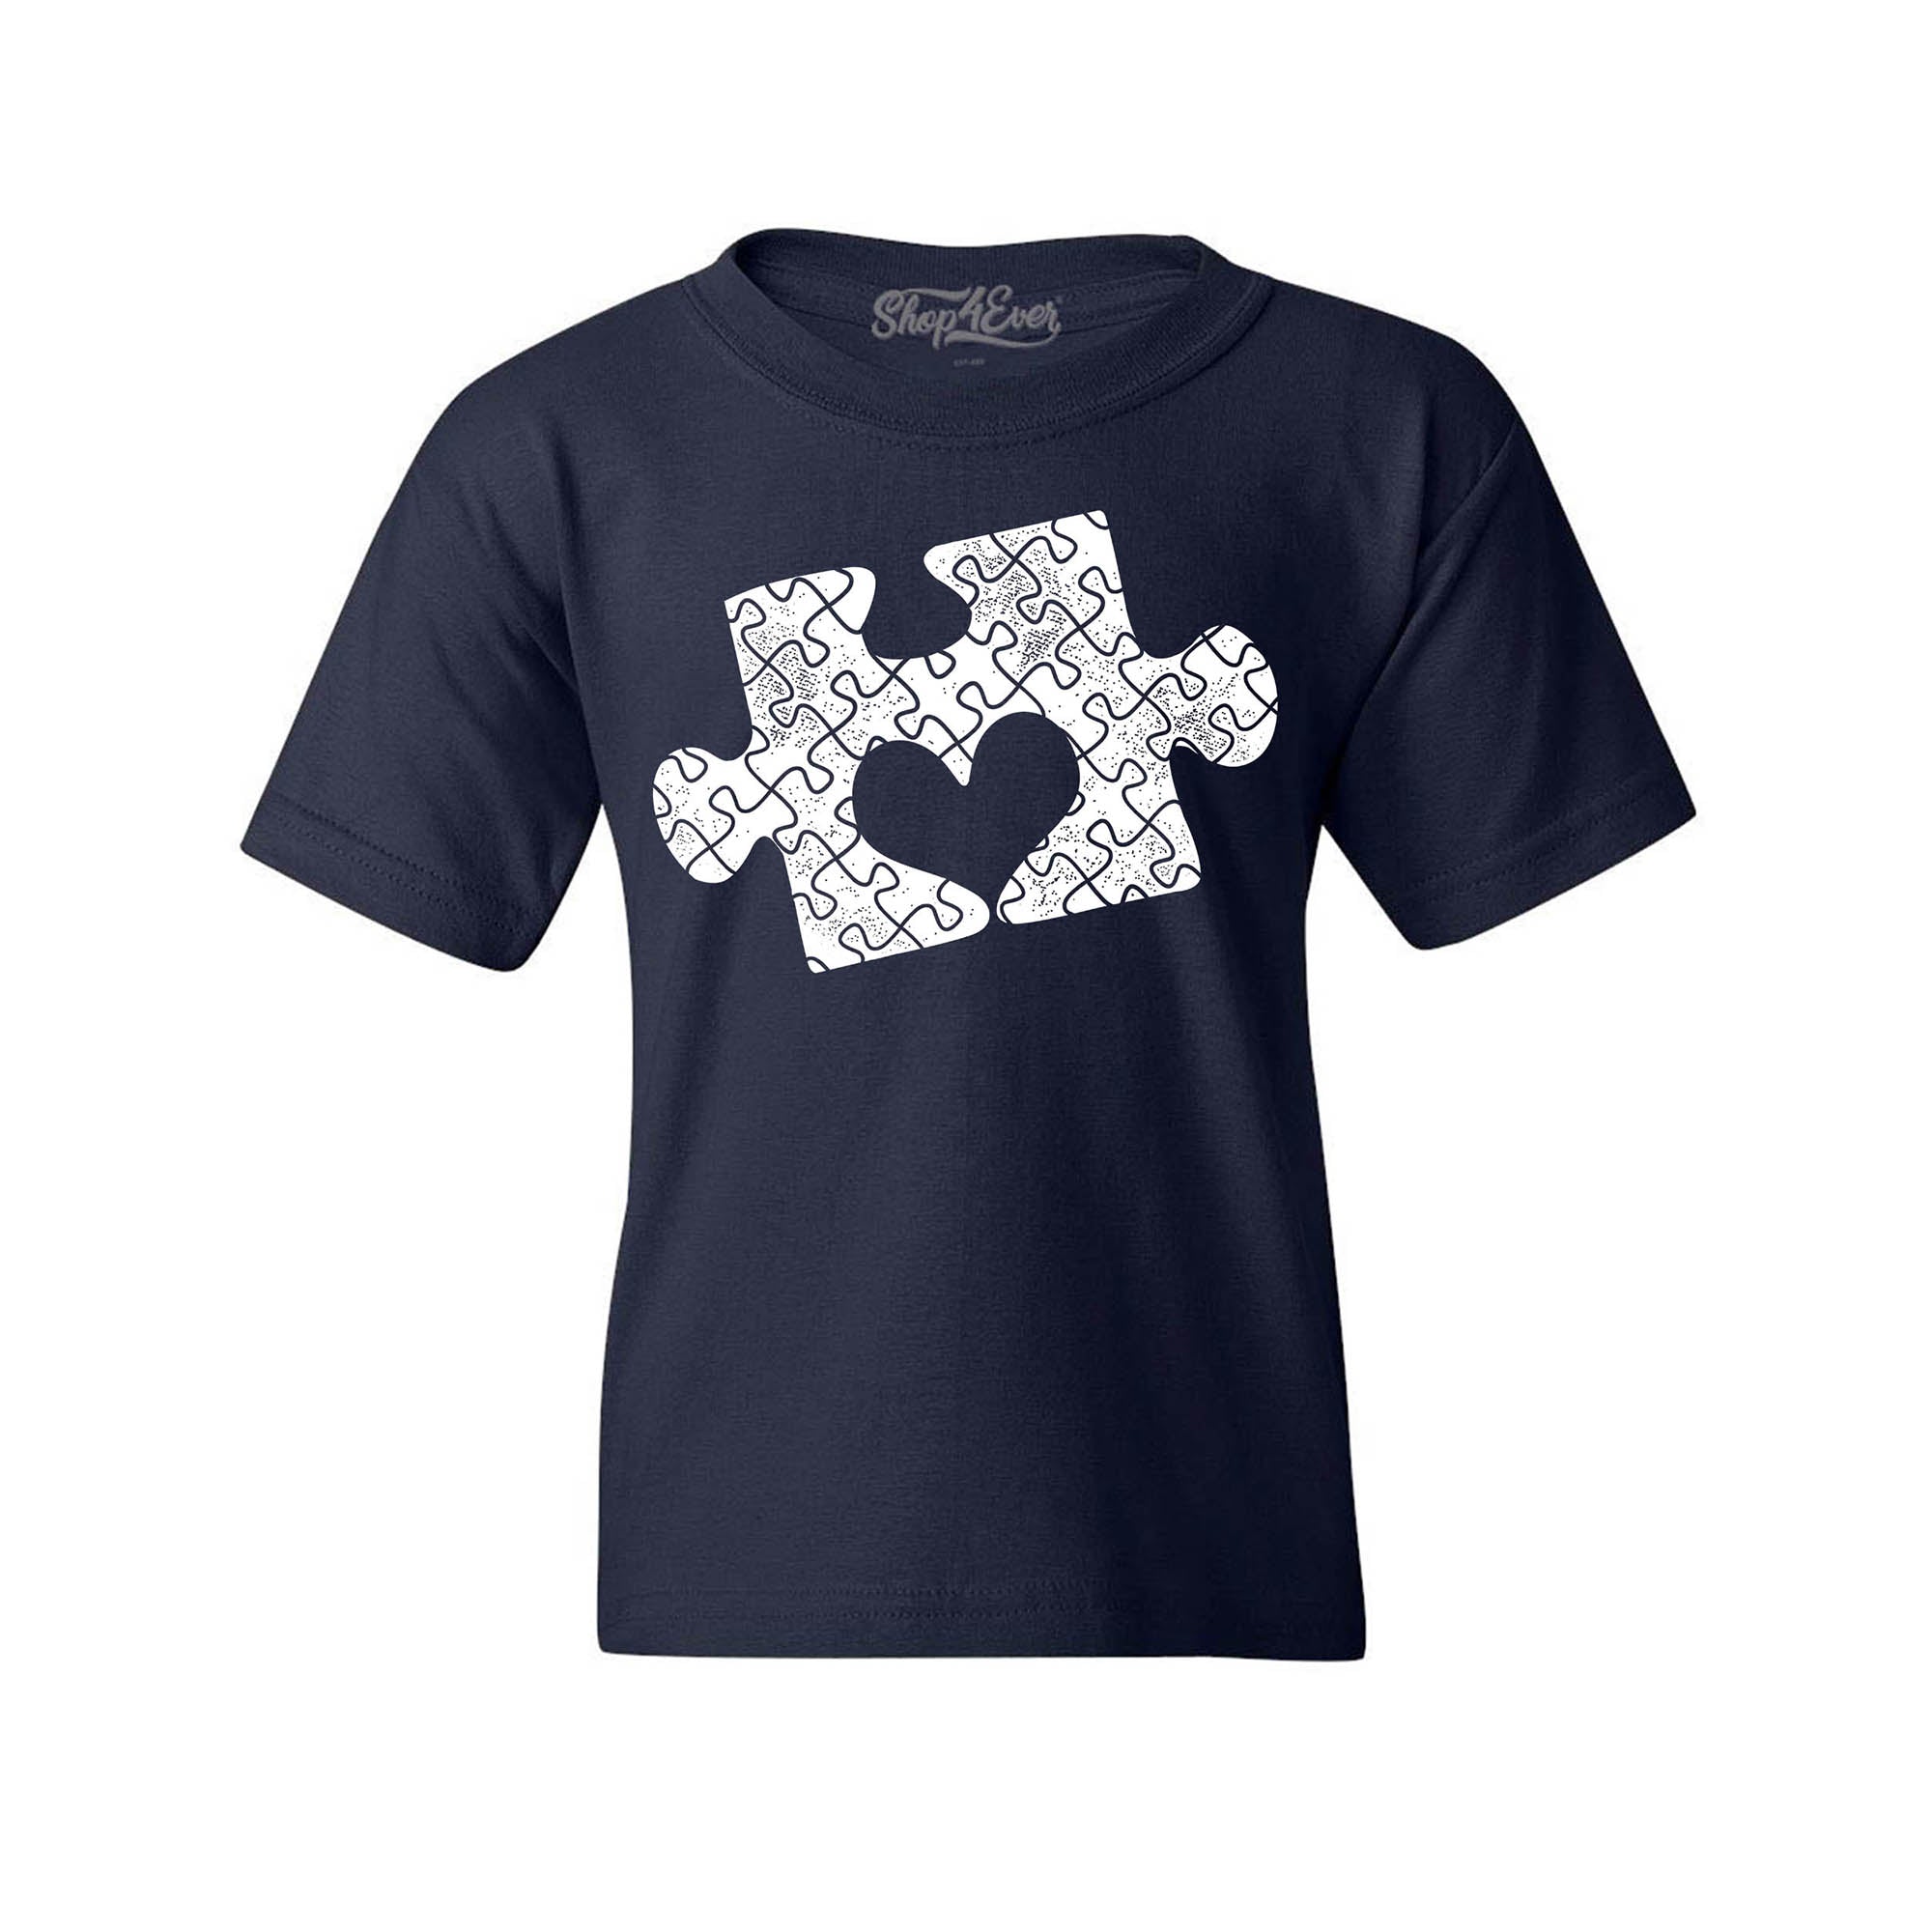 Puzzle Piece Heart Autism Awareness Child's T-Shirt Kids Tee